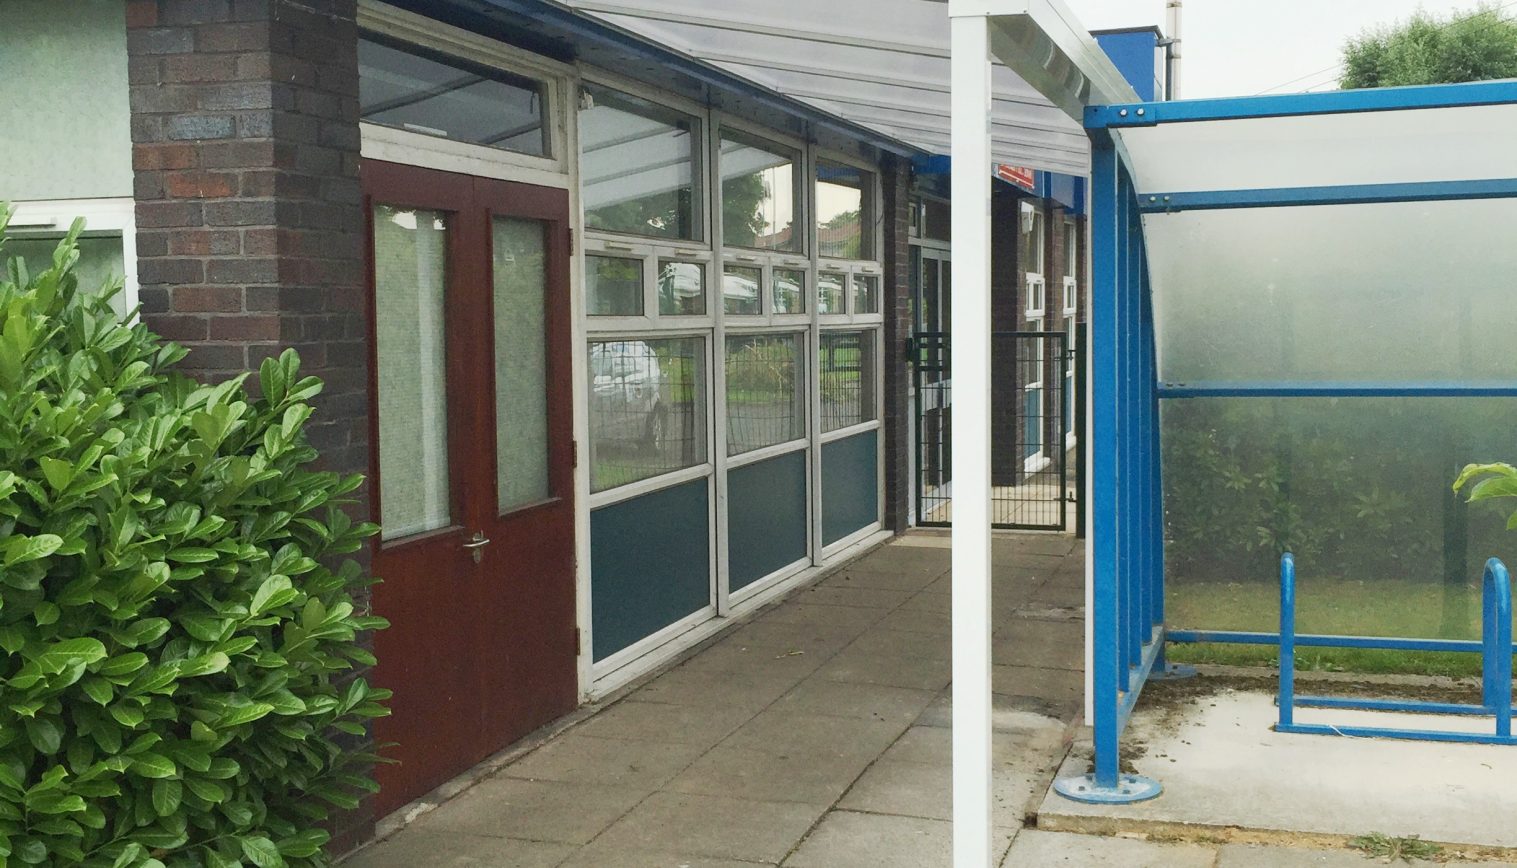 St Michael’s RC Primary School – Second Installation